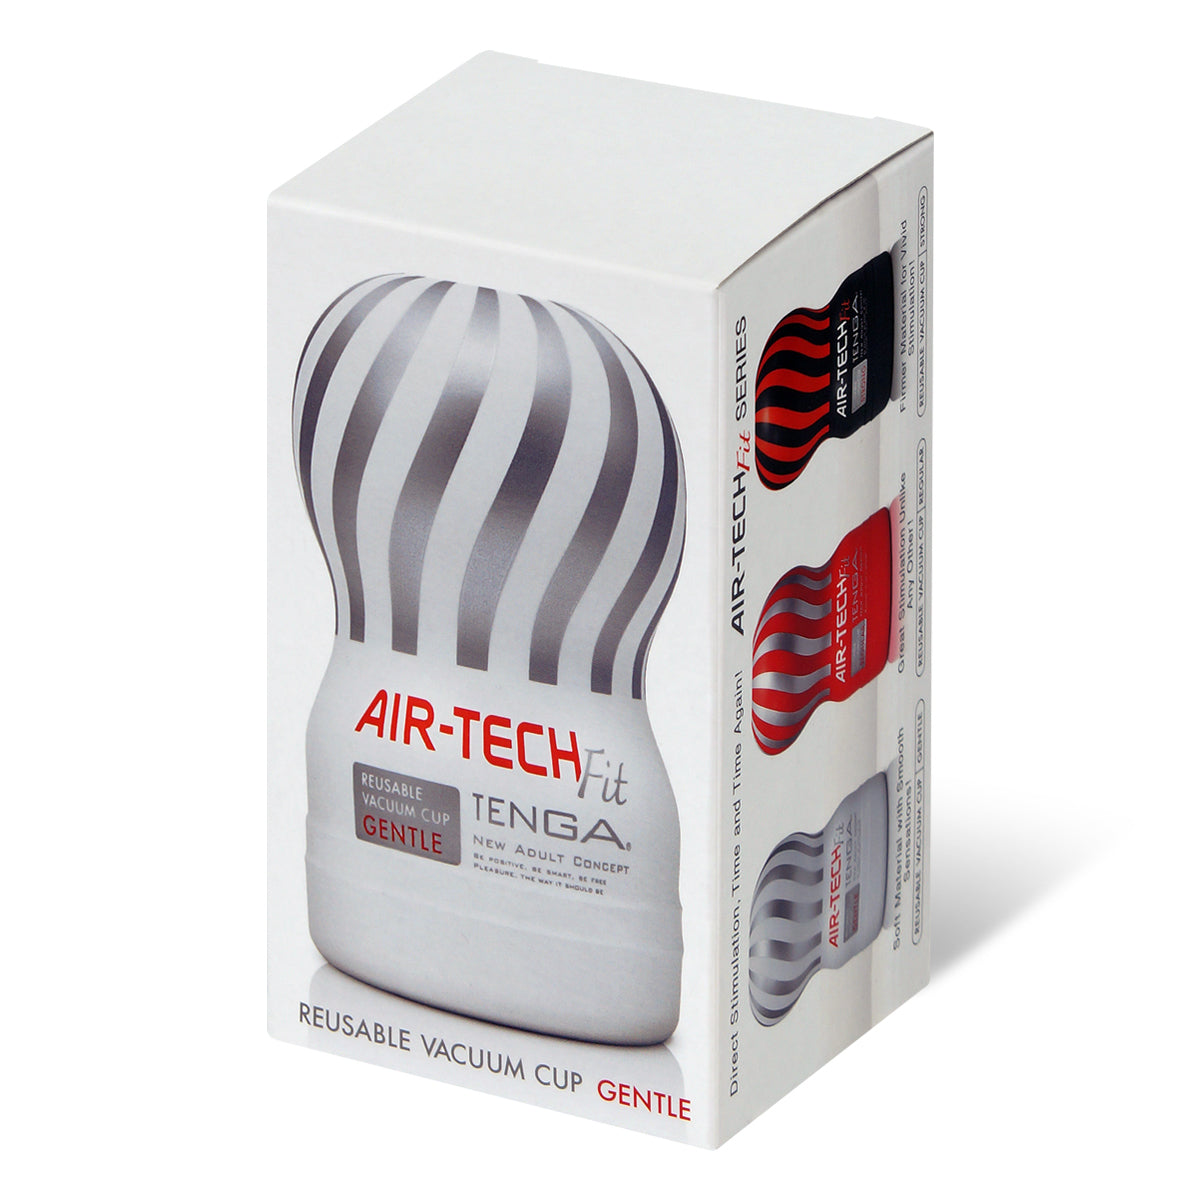 TENGA AIR-TECH Fit 重複使用型真空杯 柔軟型